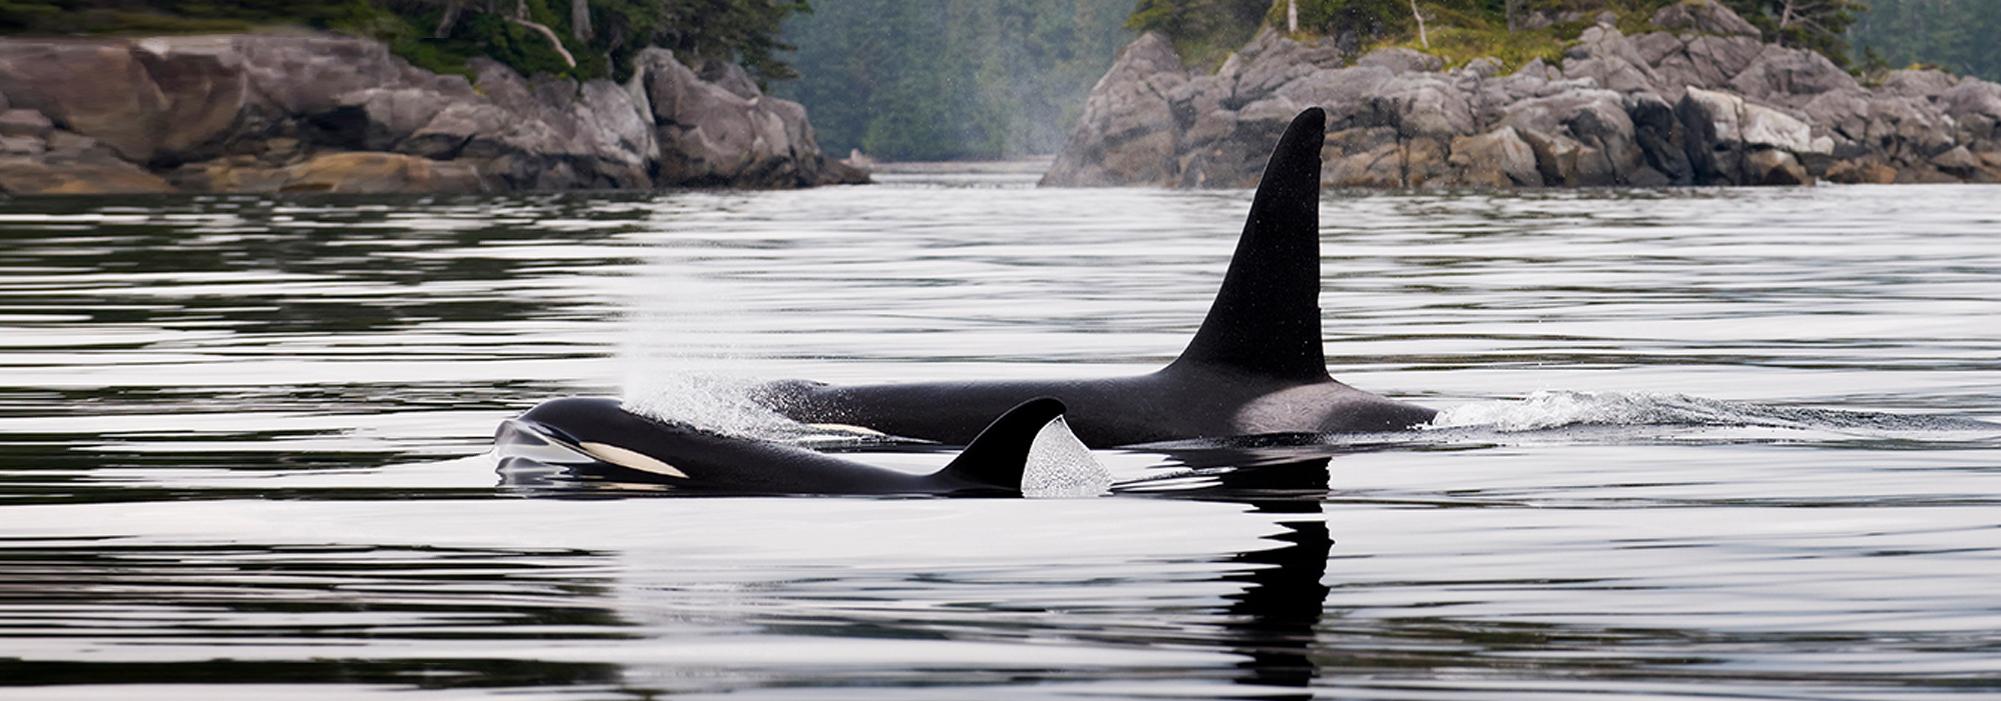 Two orcas surfacing near rocky islands